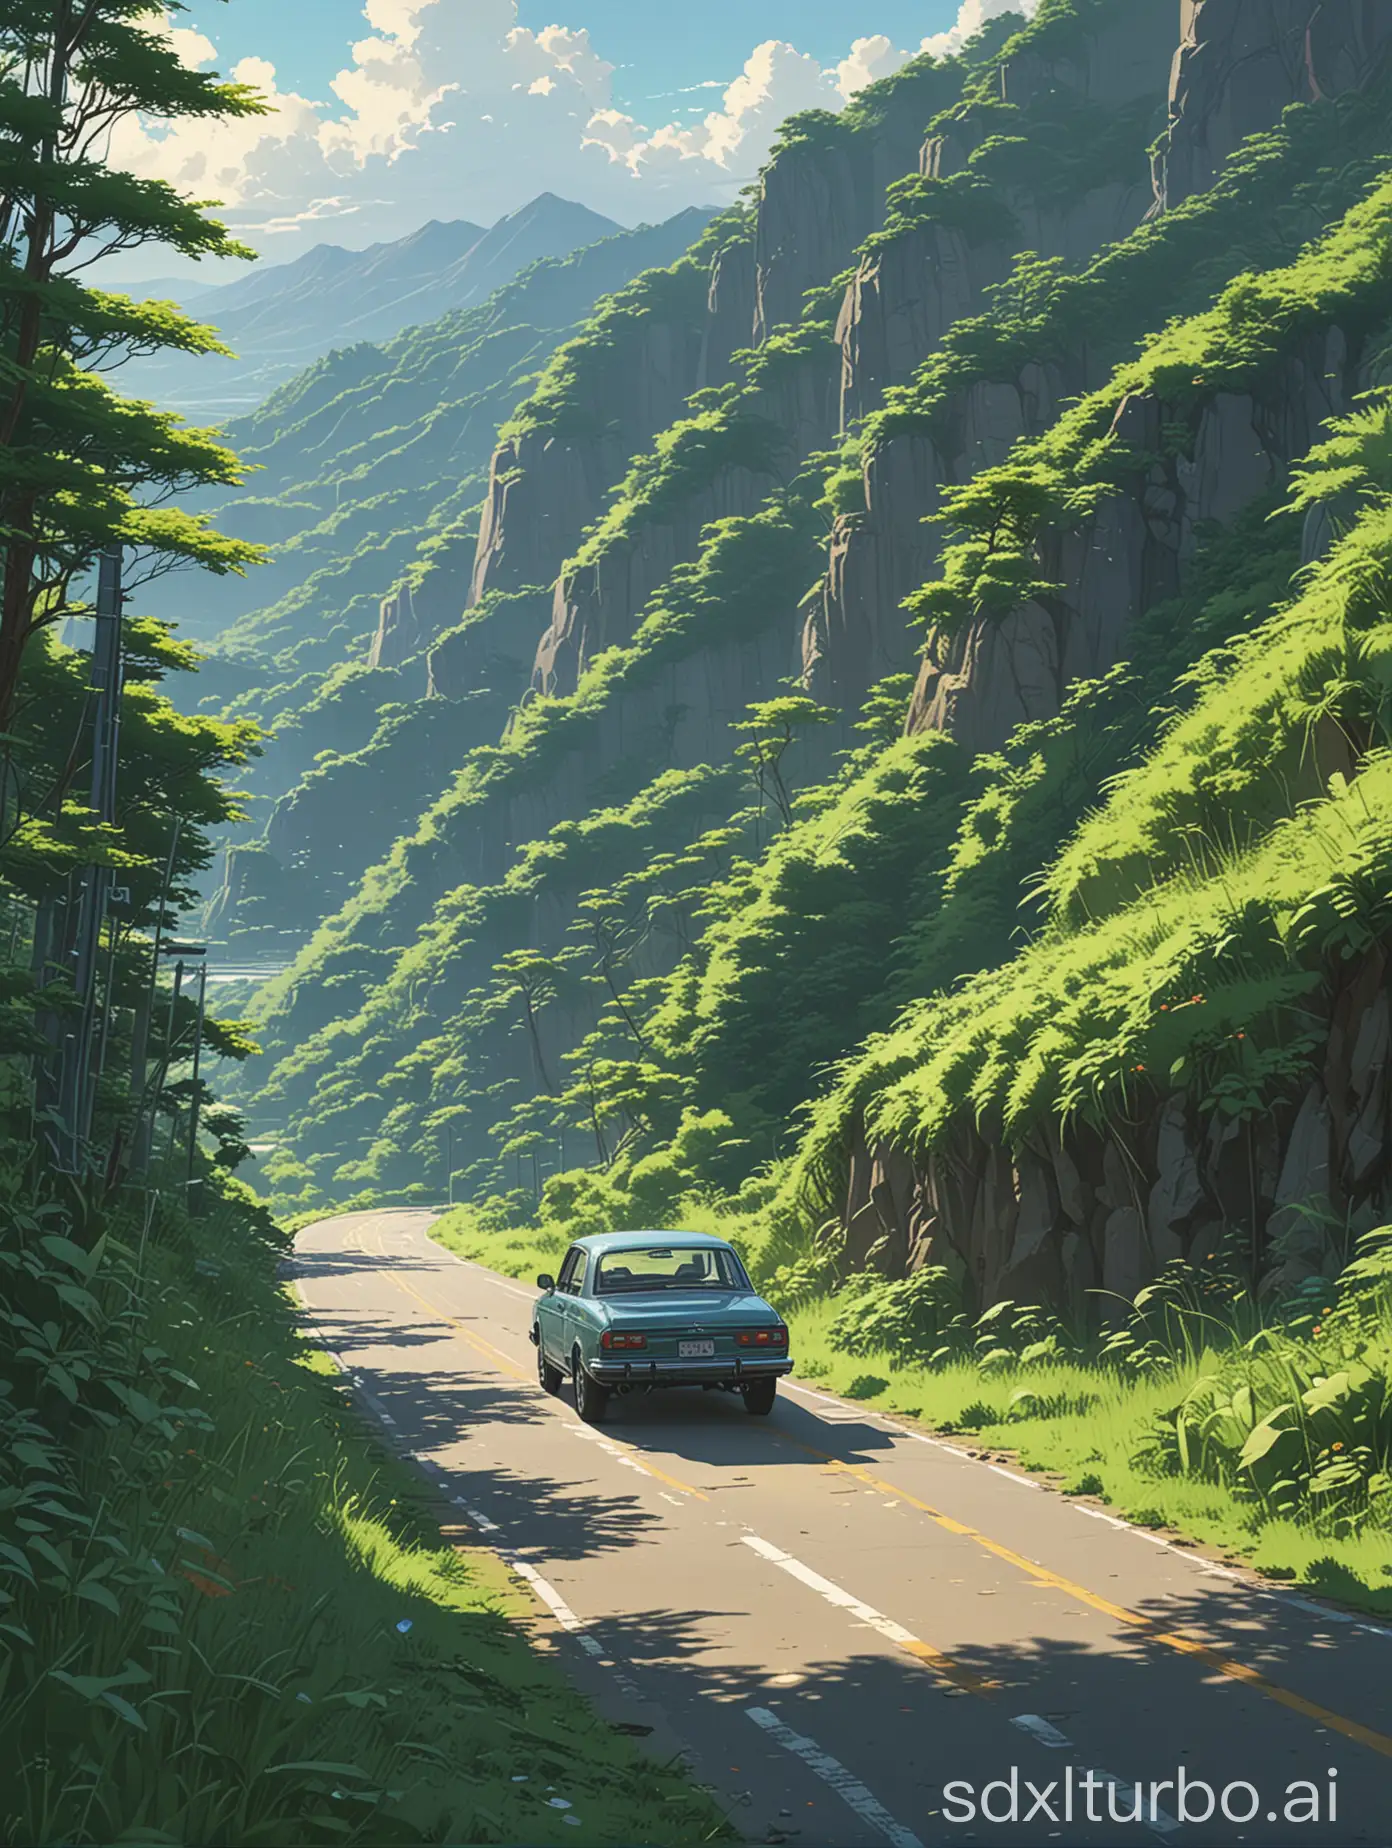 Anime-Countryside-Landscape-Car-Journey-through-Lush-Green-Hillsides